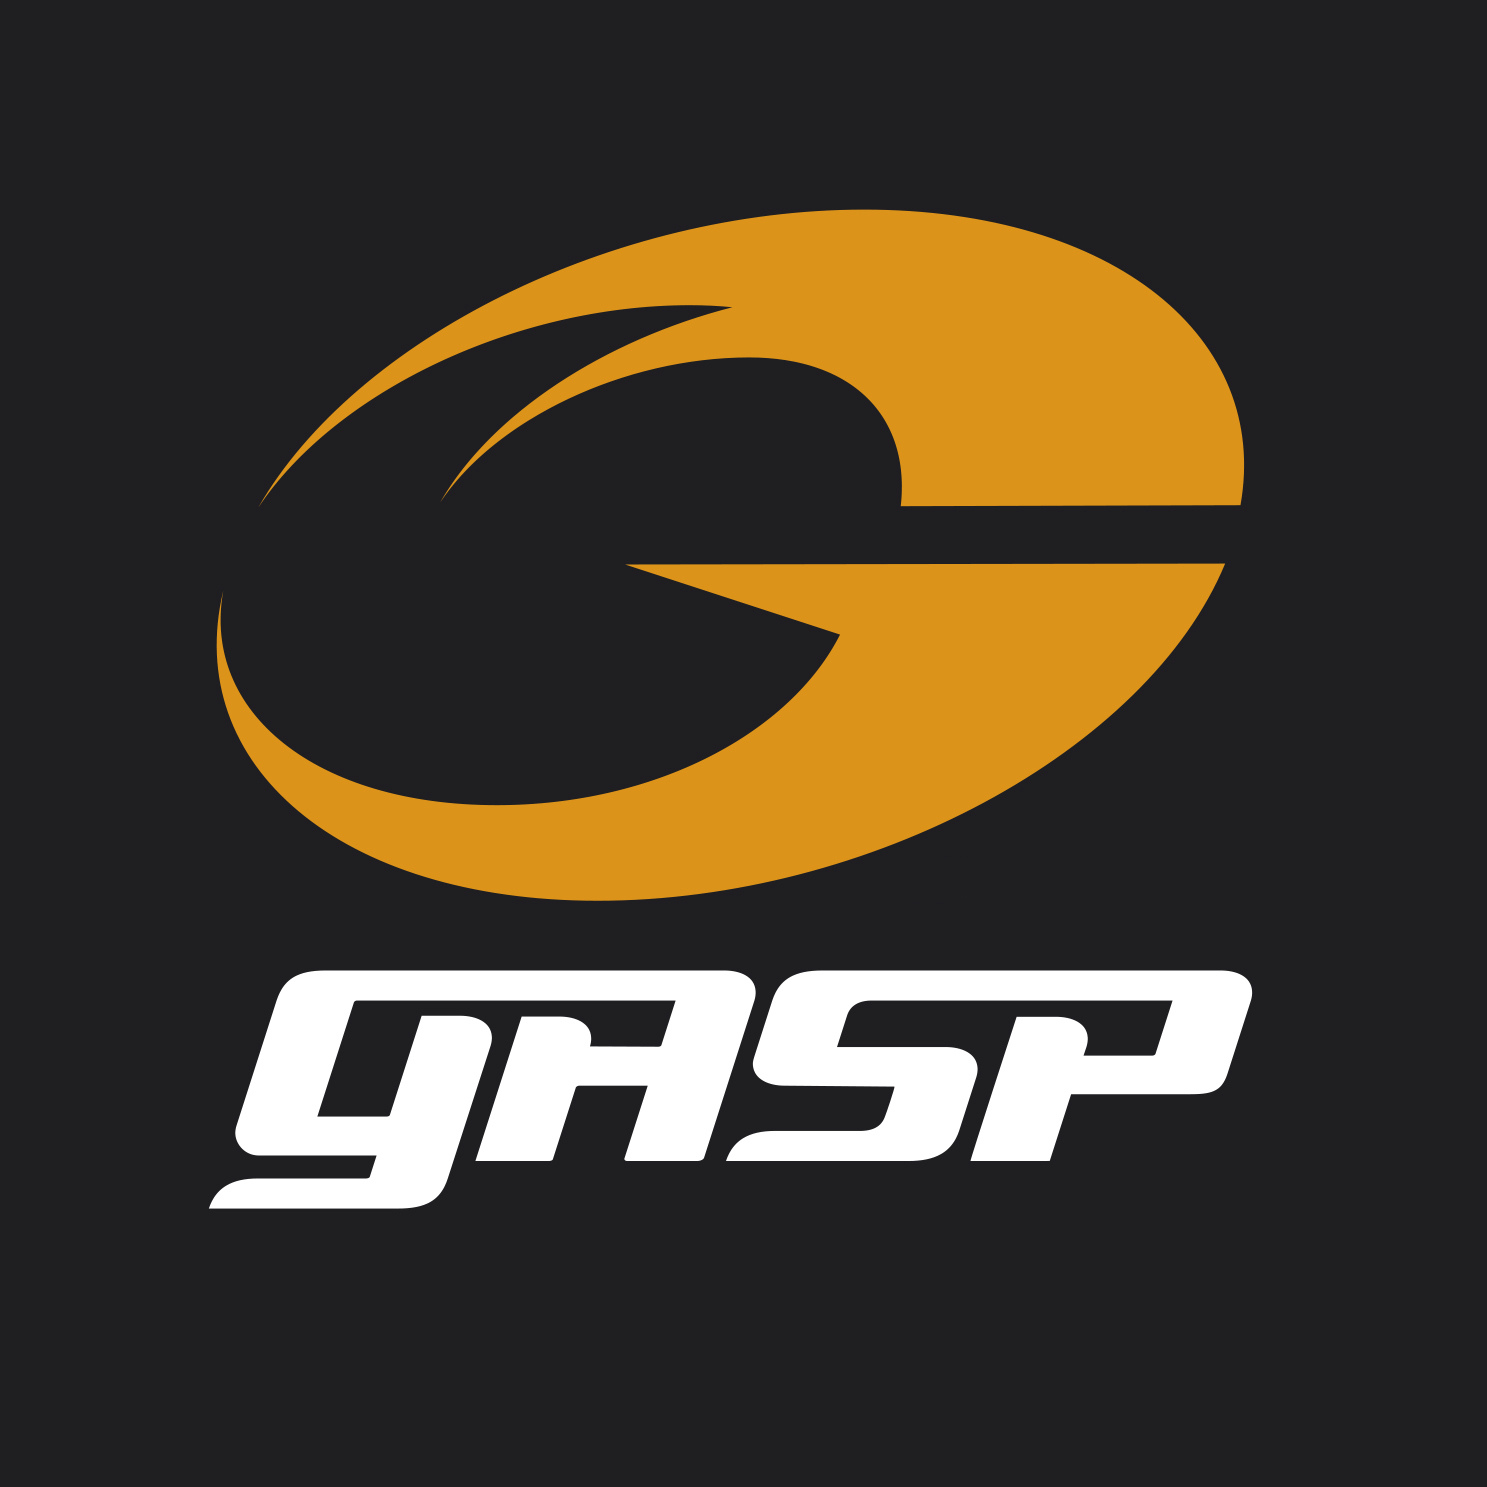 gasp_bigG_white_logo